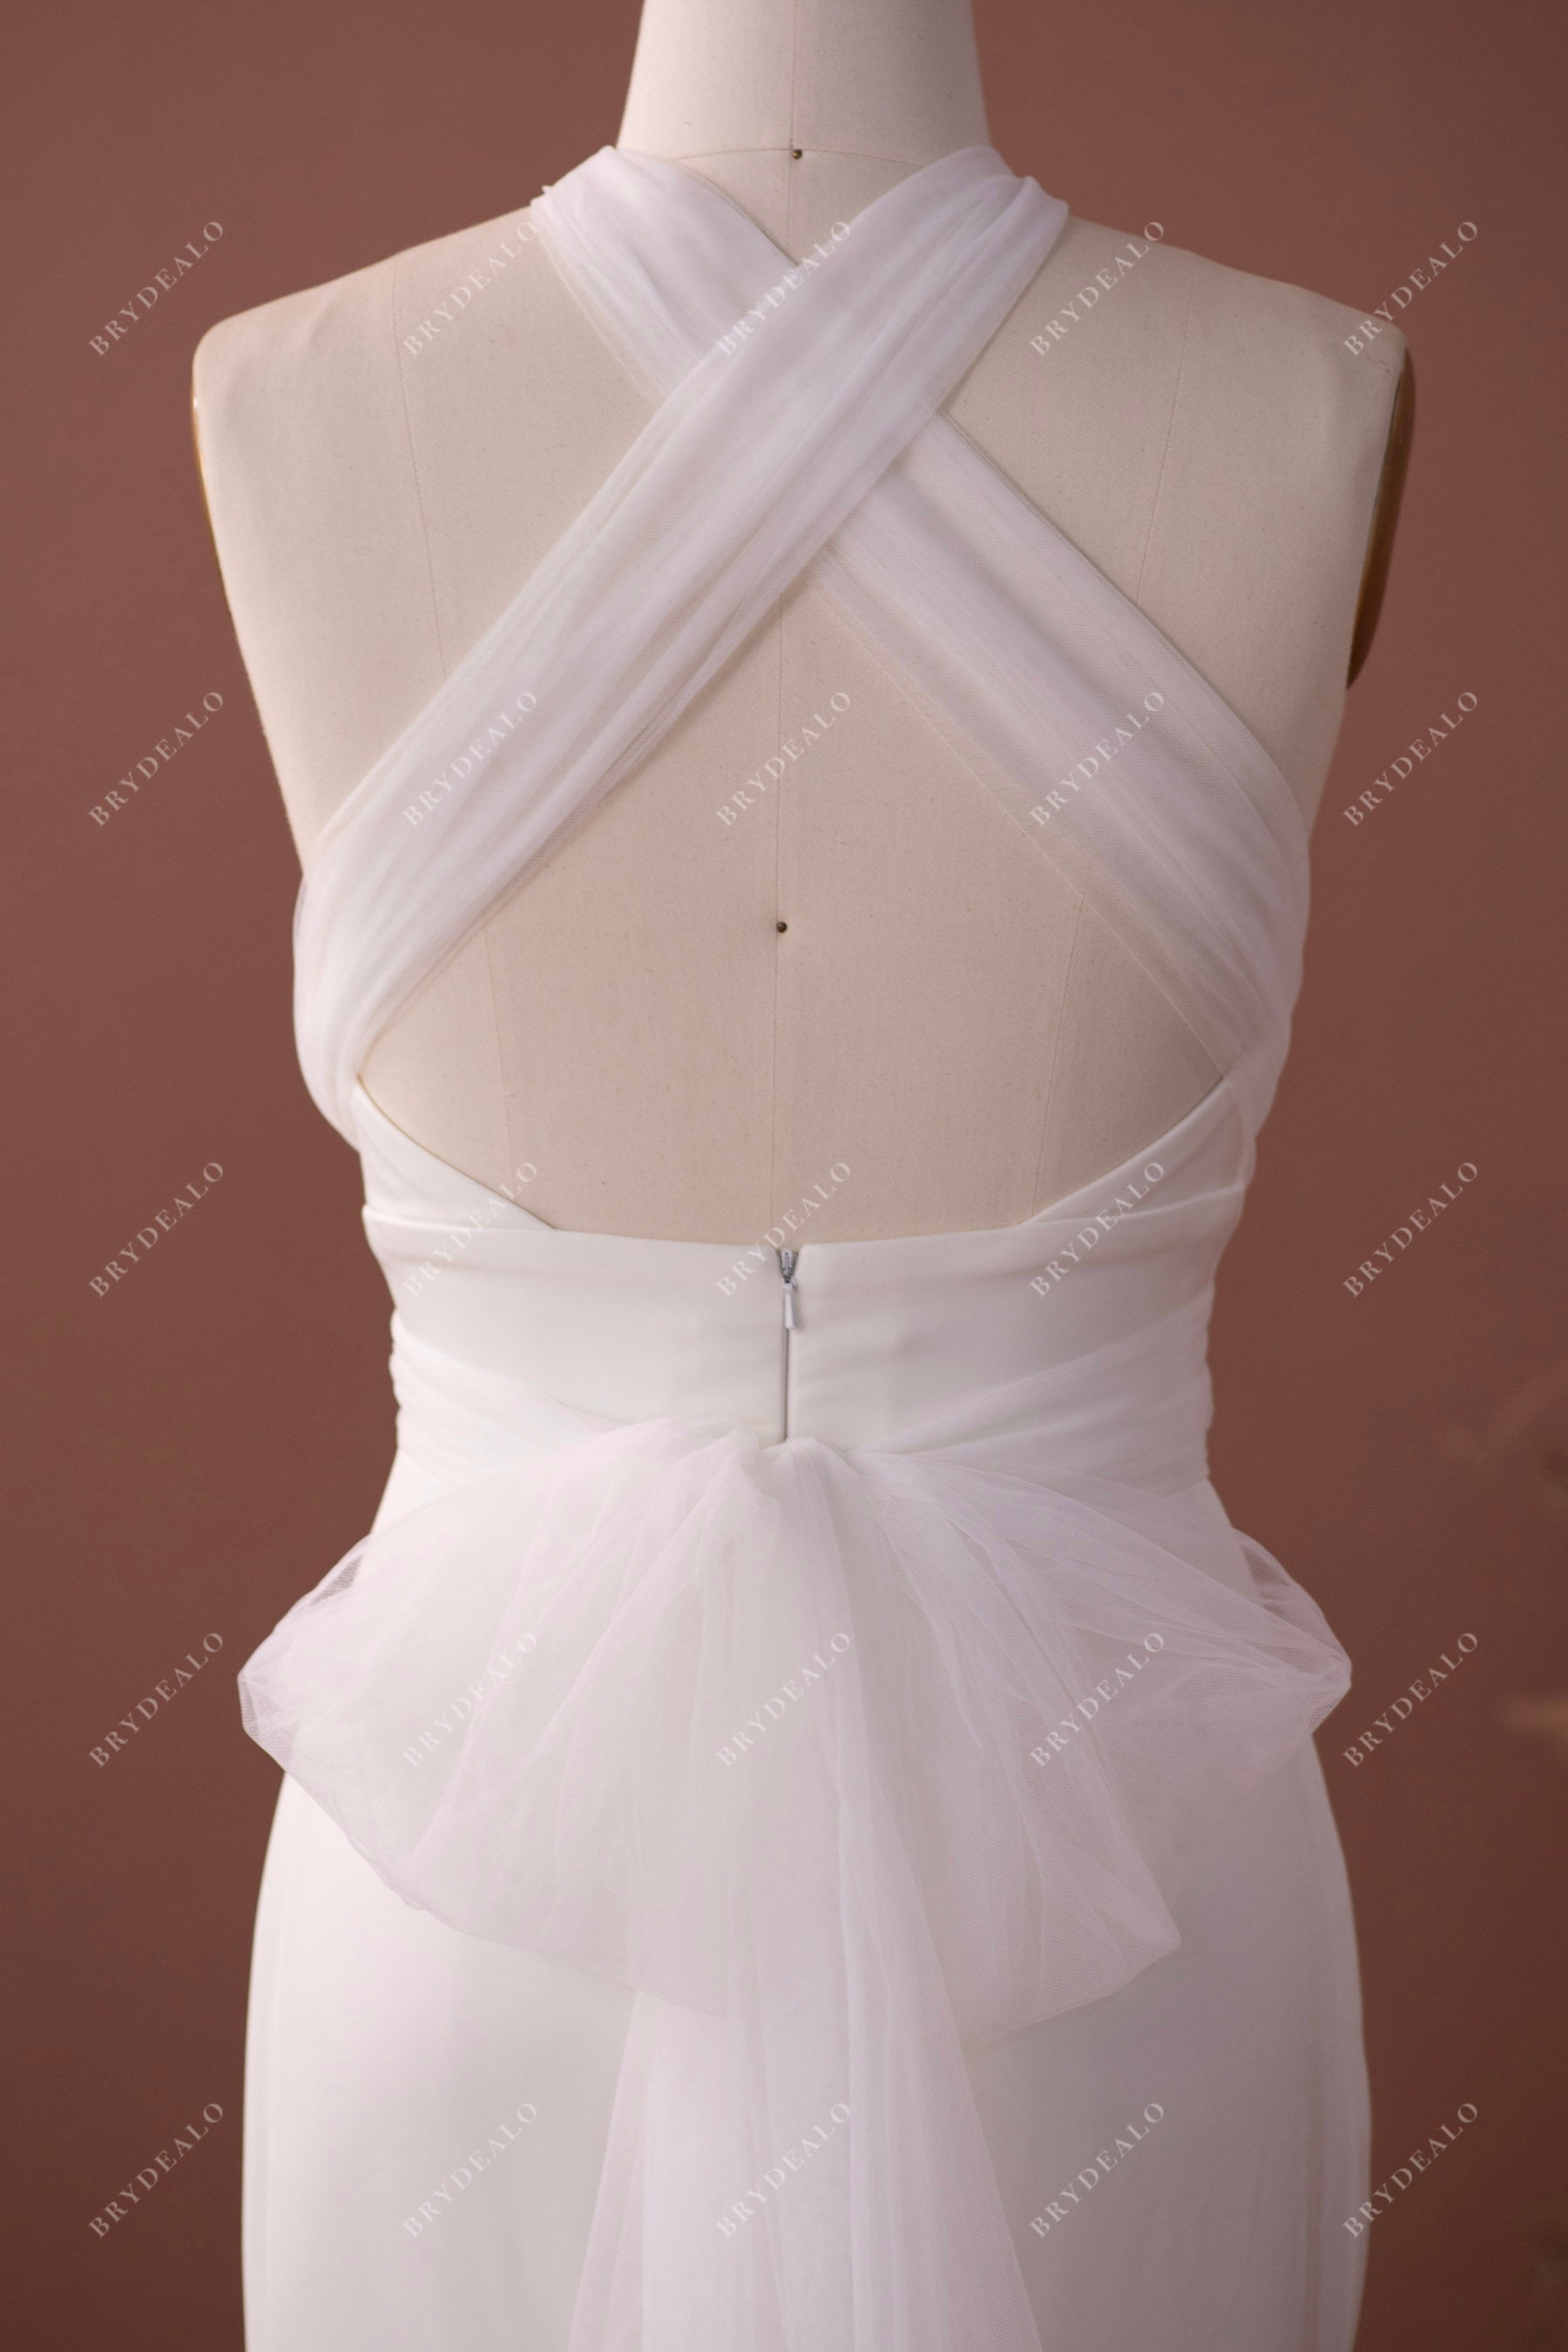 criss cross back sash wedding gown